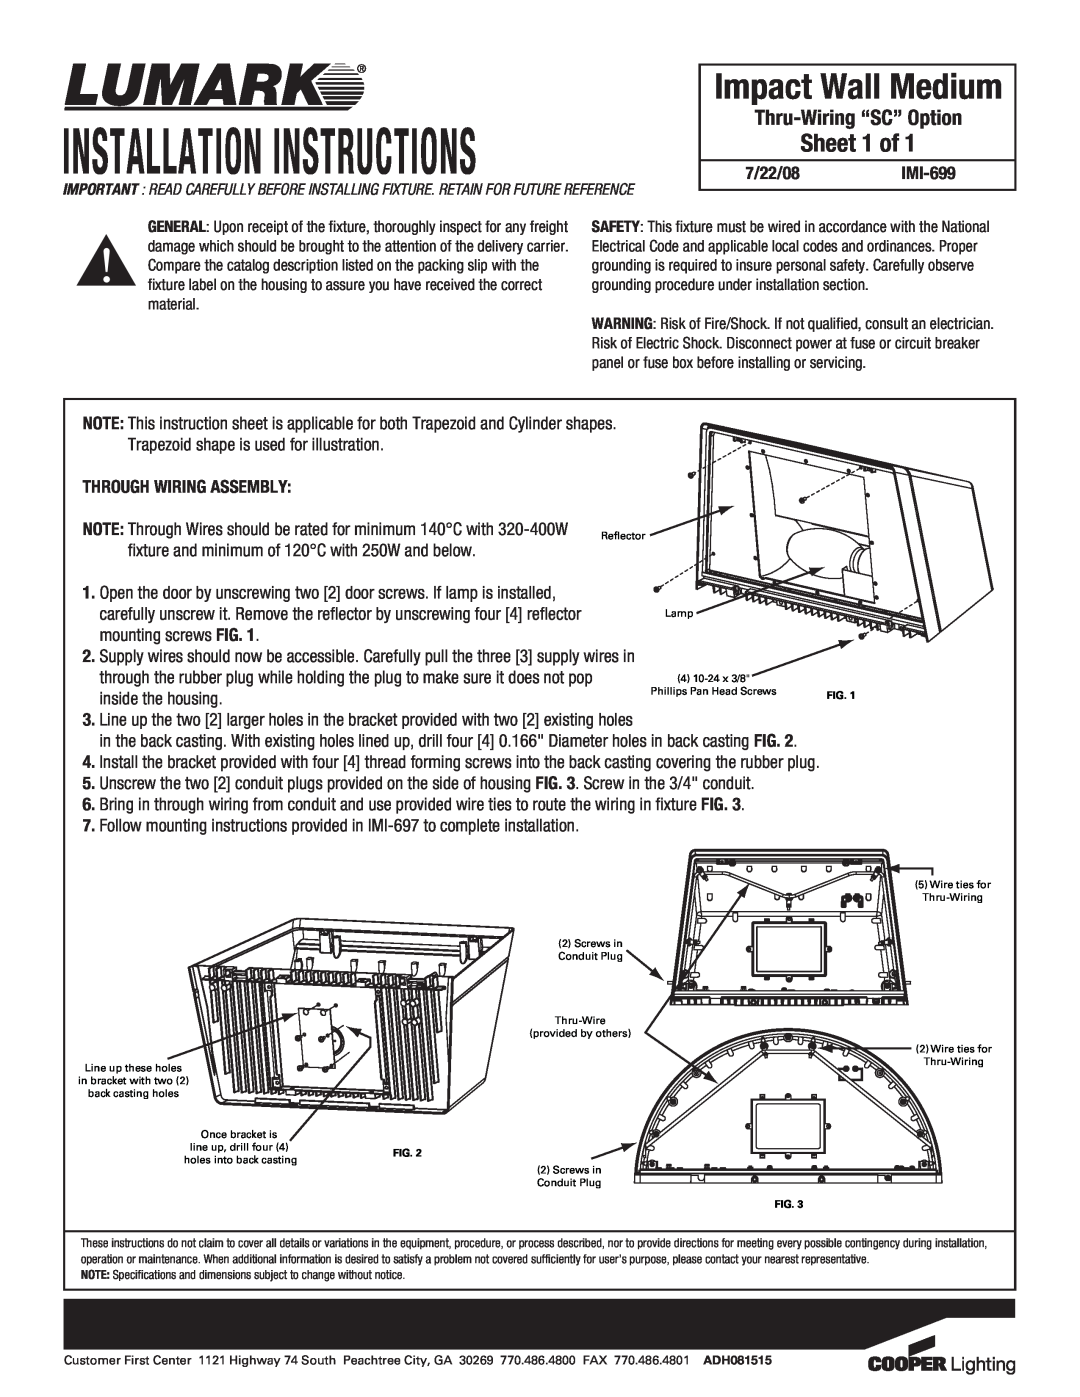 Cooper Lighting IMI-699 installation instructions Installation Instructions, Impact Wall Medium, Sheet 1 of 